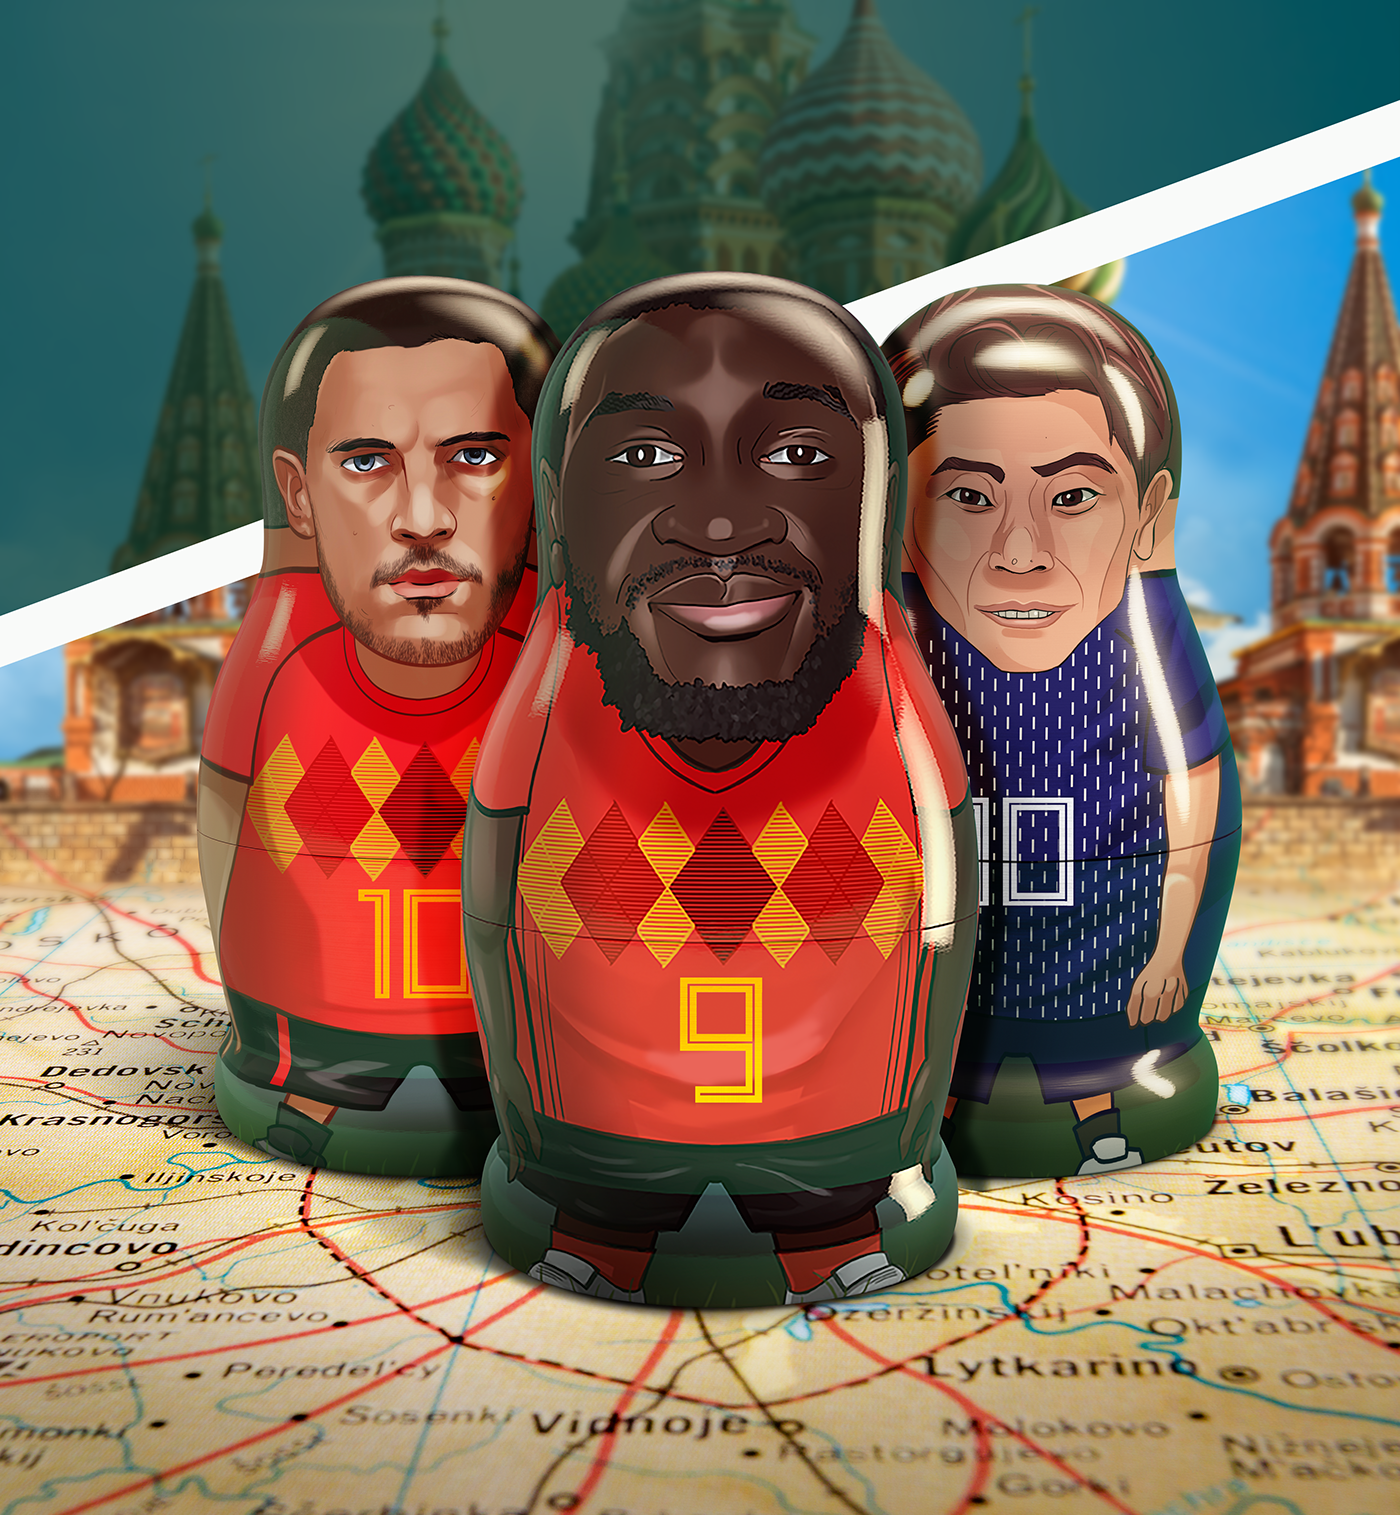 World Cup 2018 world cup paddy power Russian Dolls dolls babushka doll football